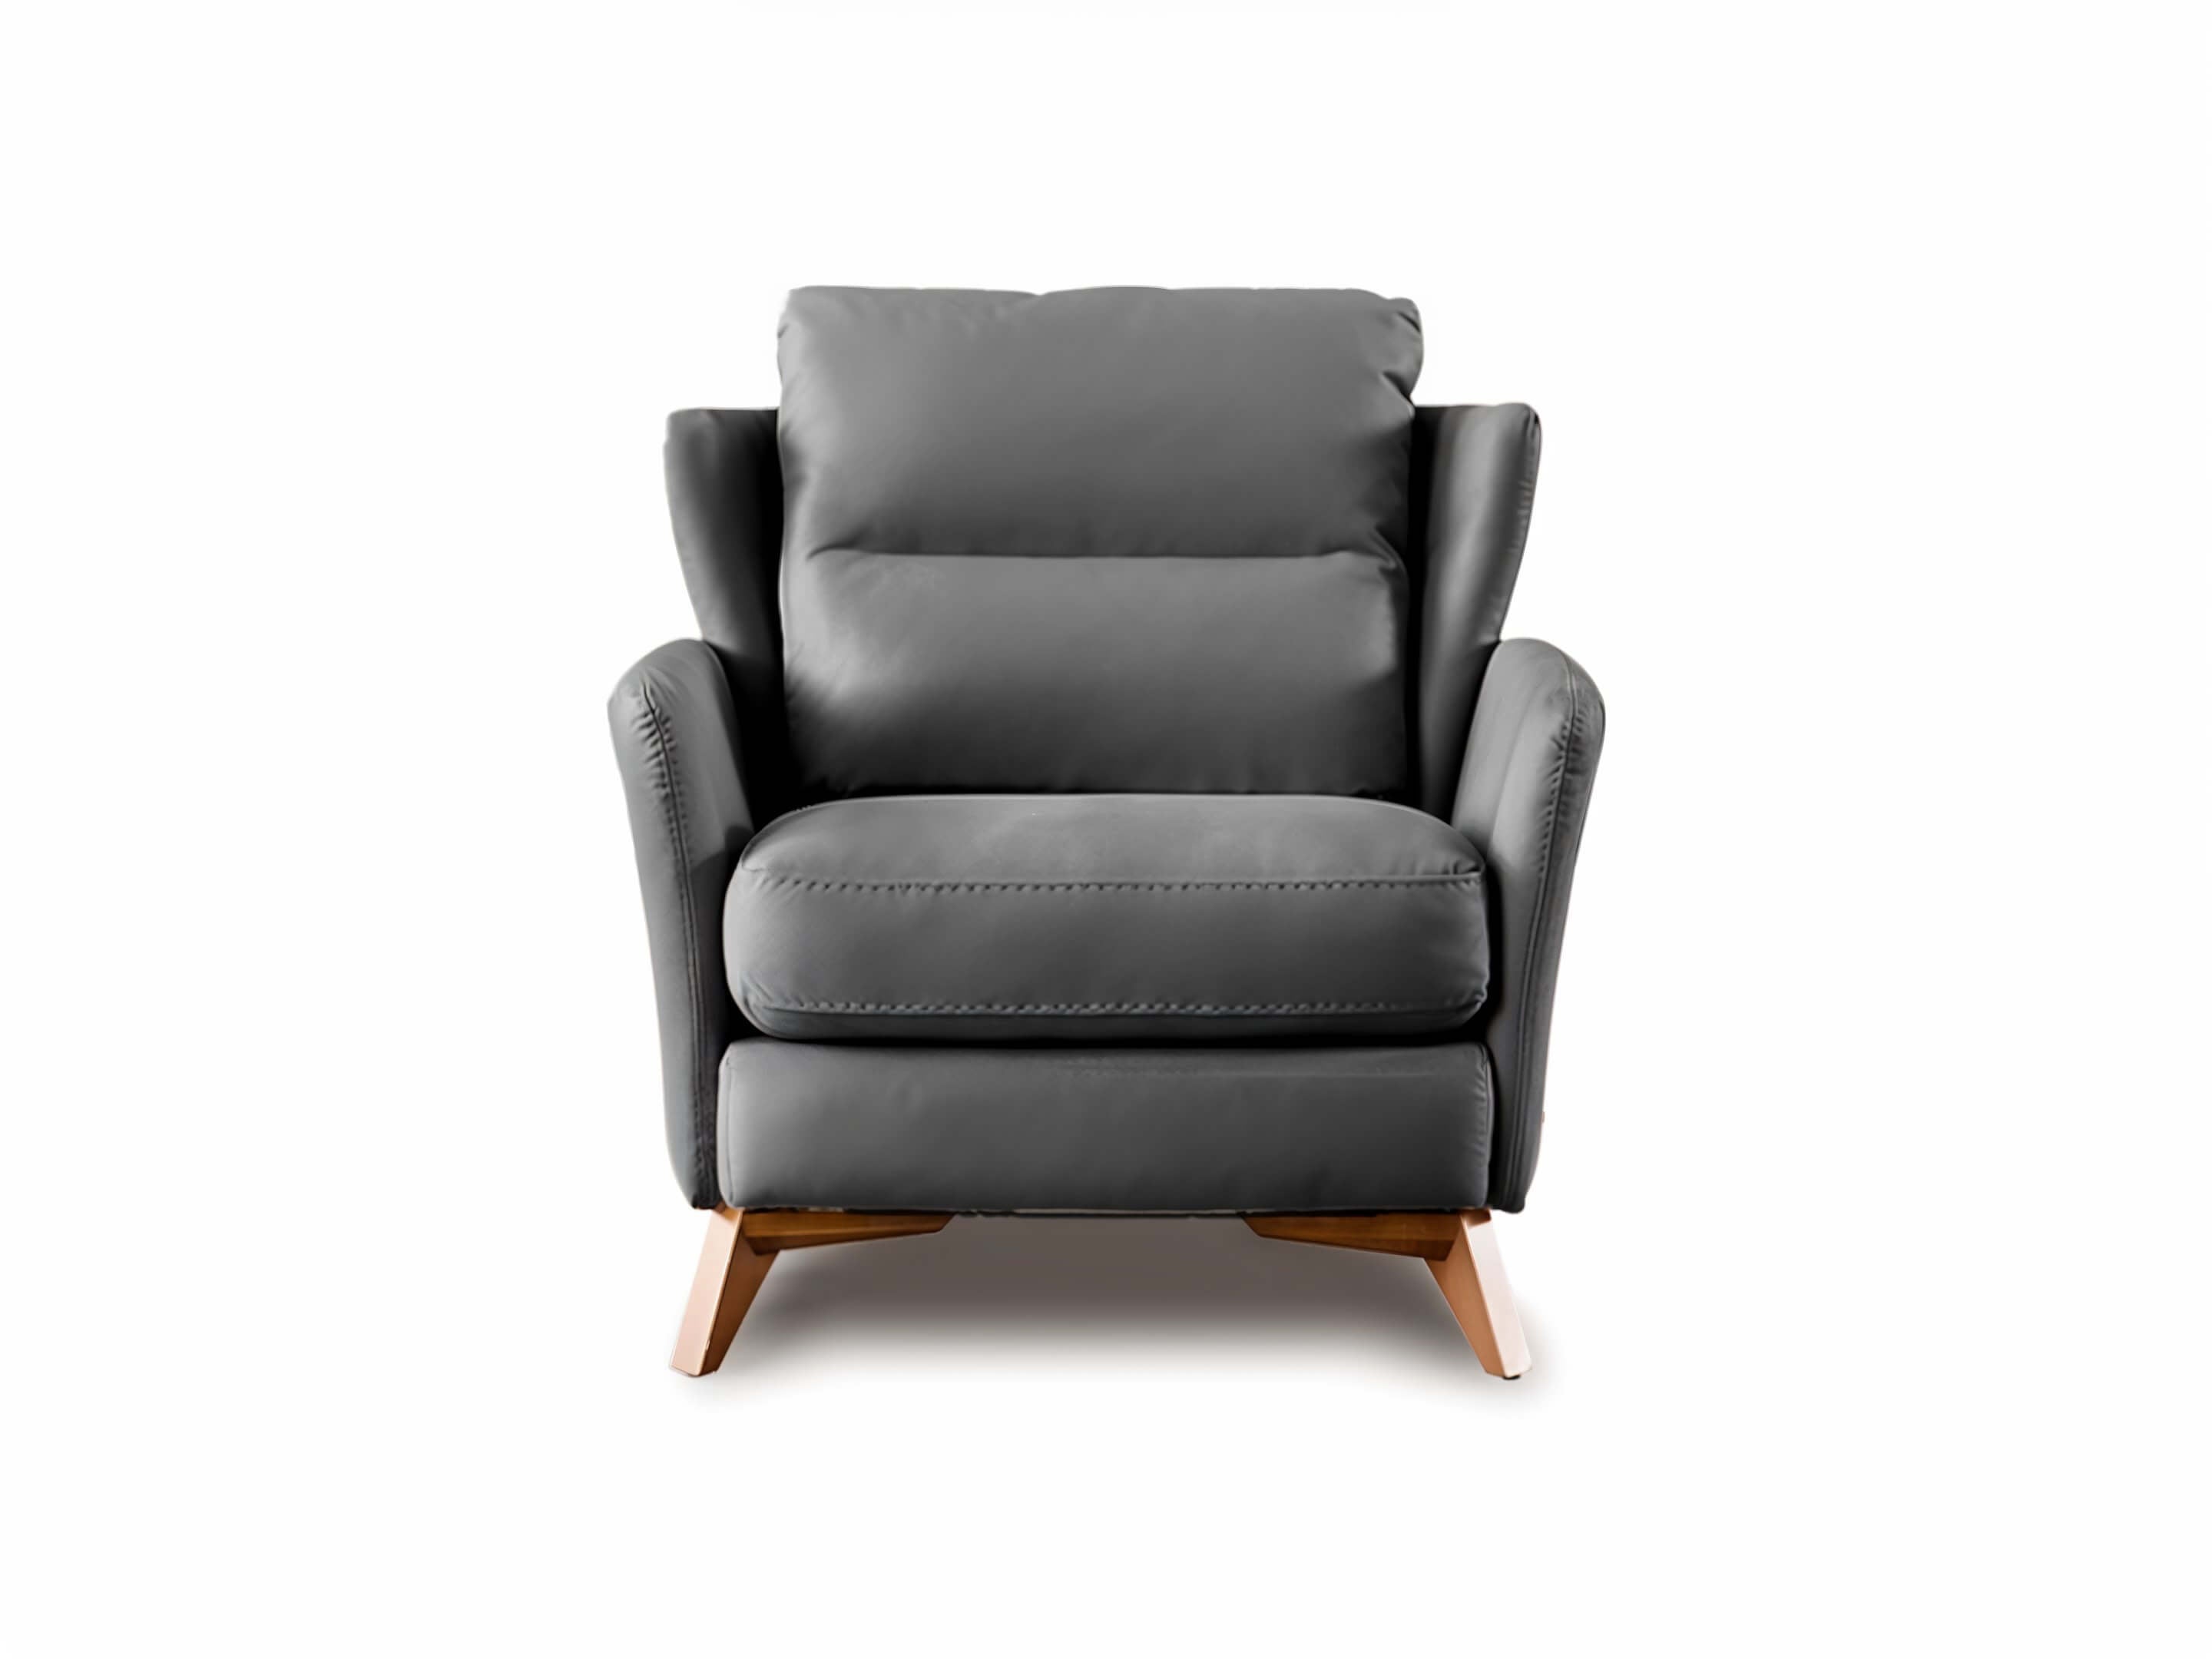 variant armchair grey- Lux Furniture